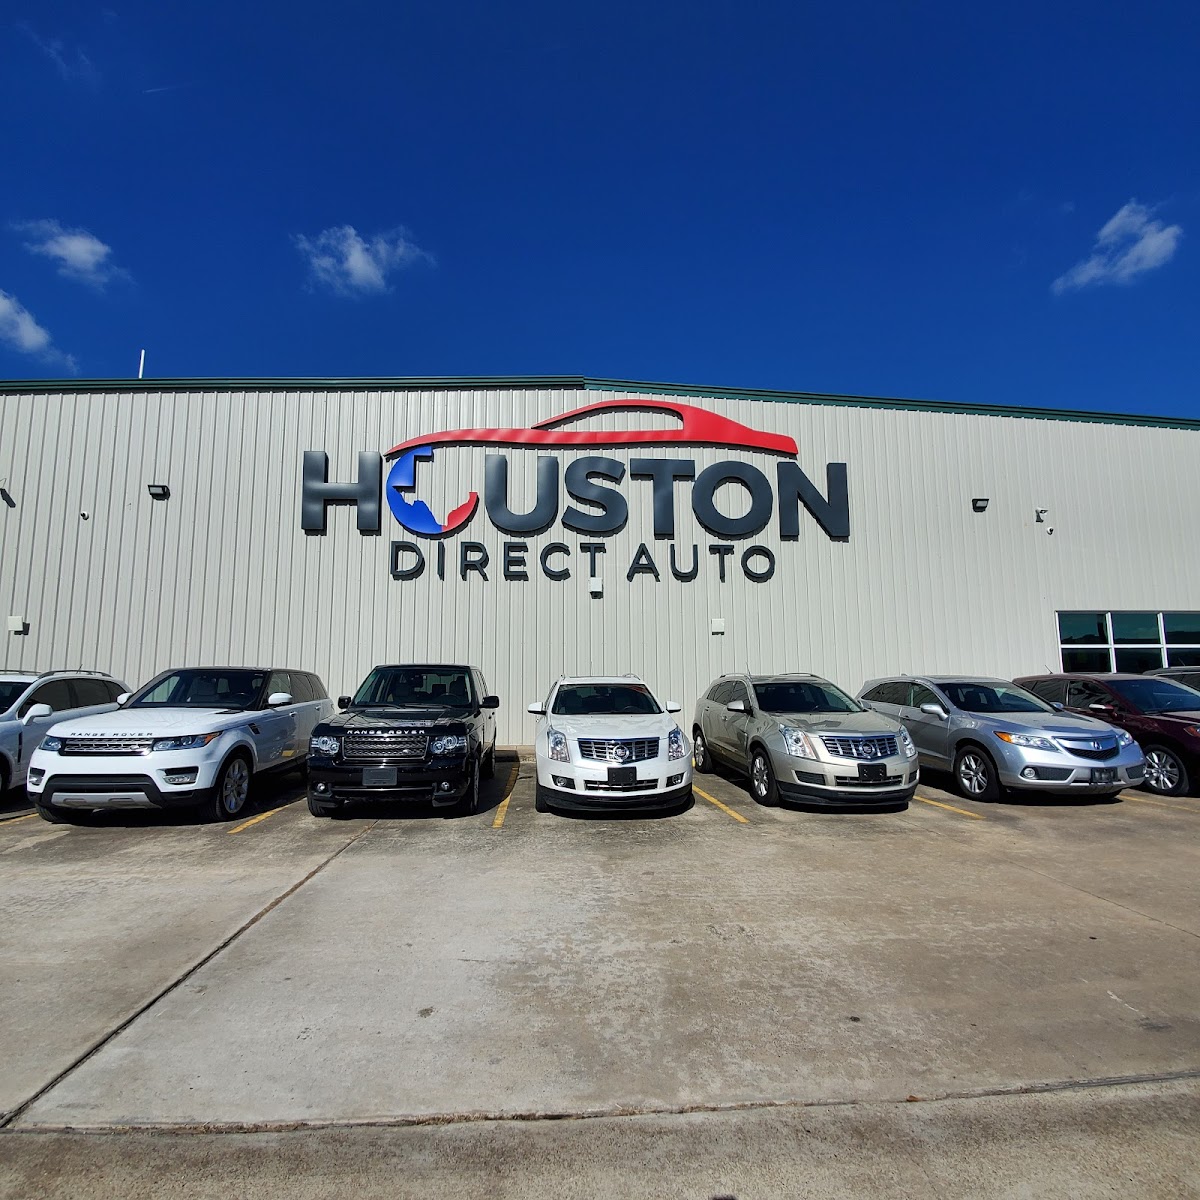 Houston Direct Auto reviews